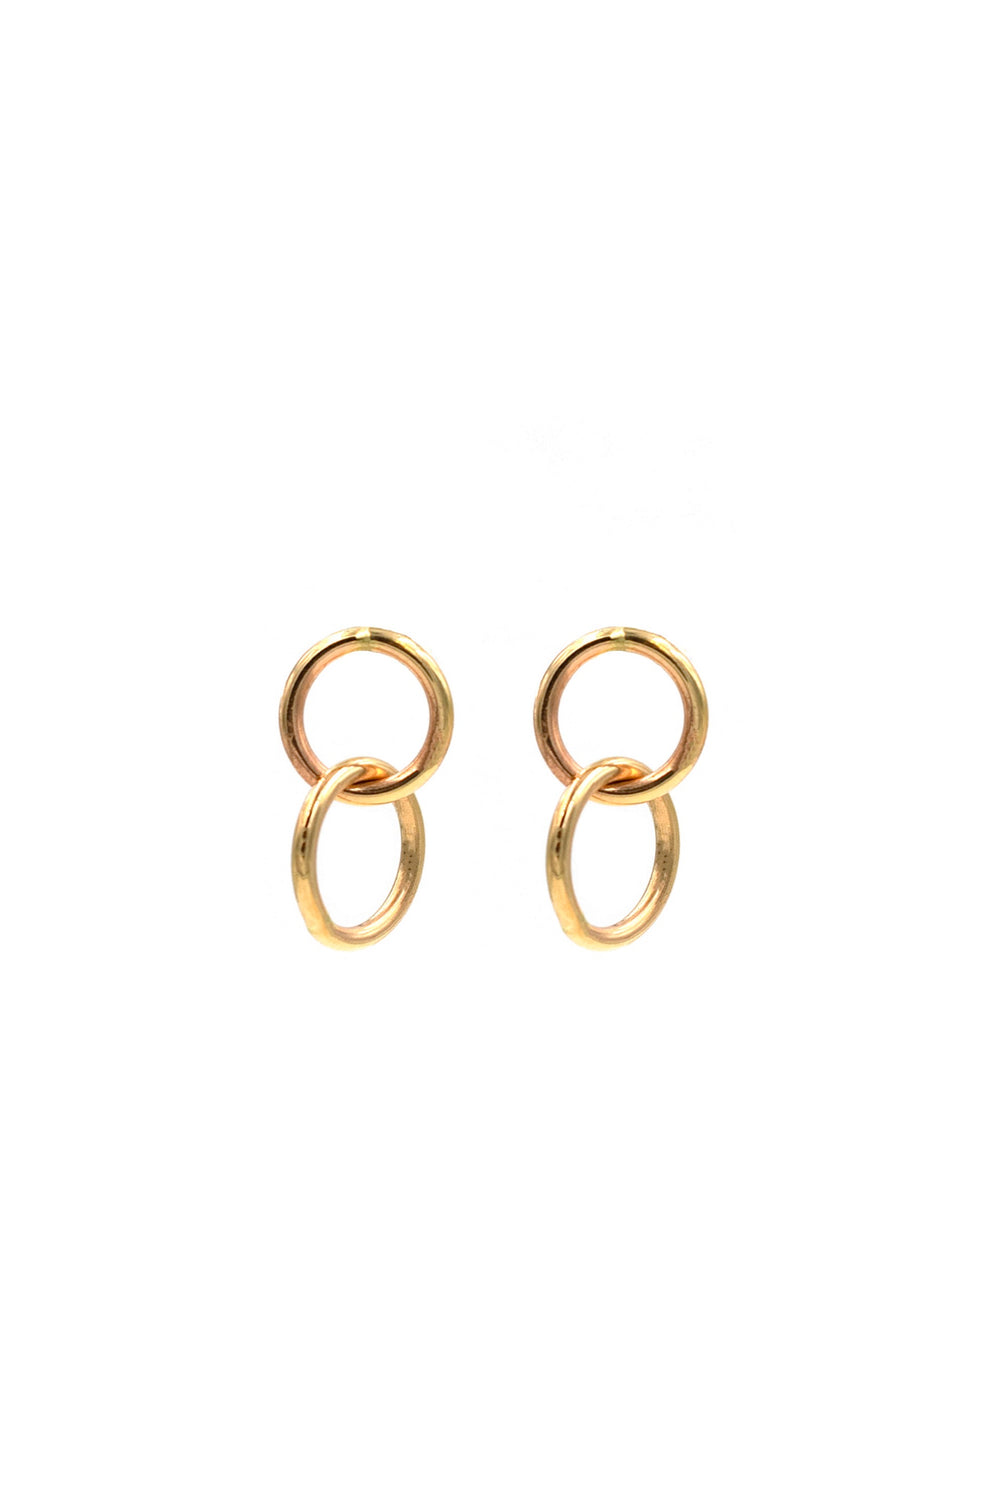 Gold Two Rings Earrings